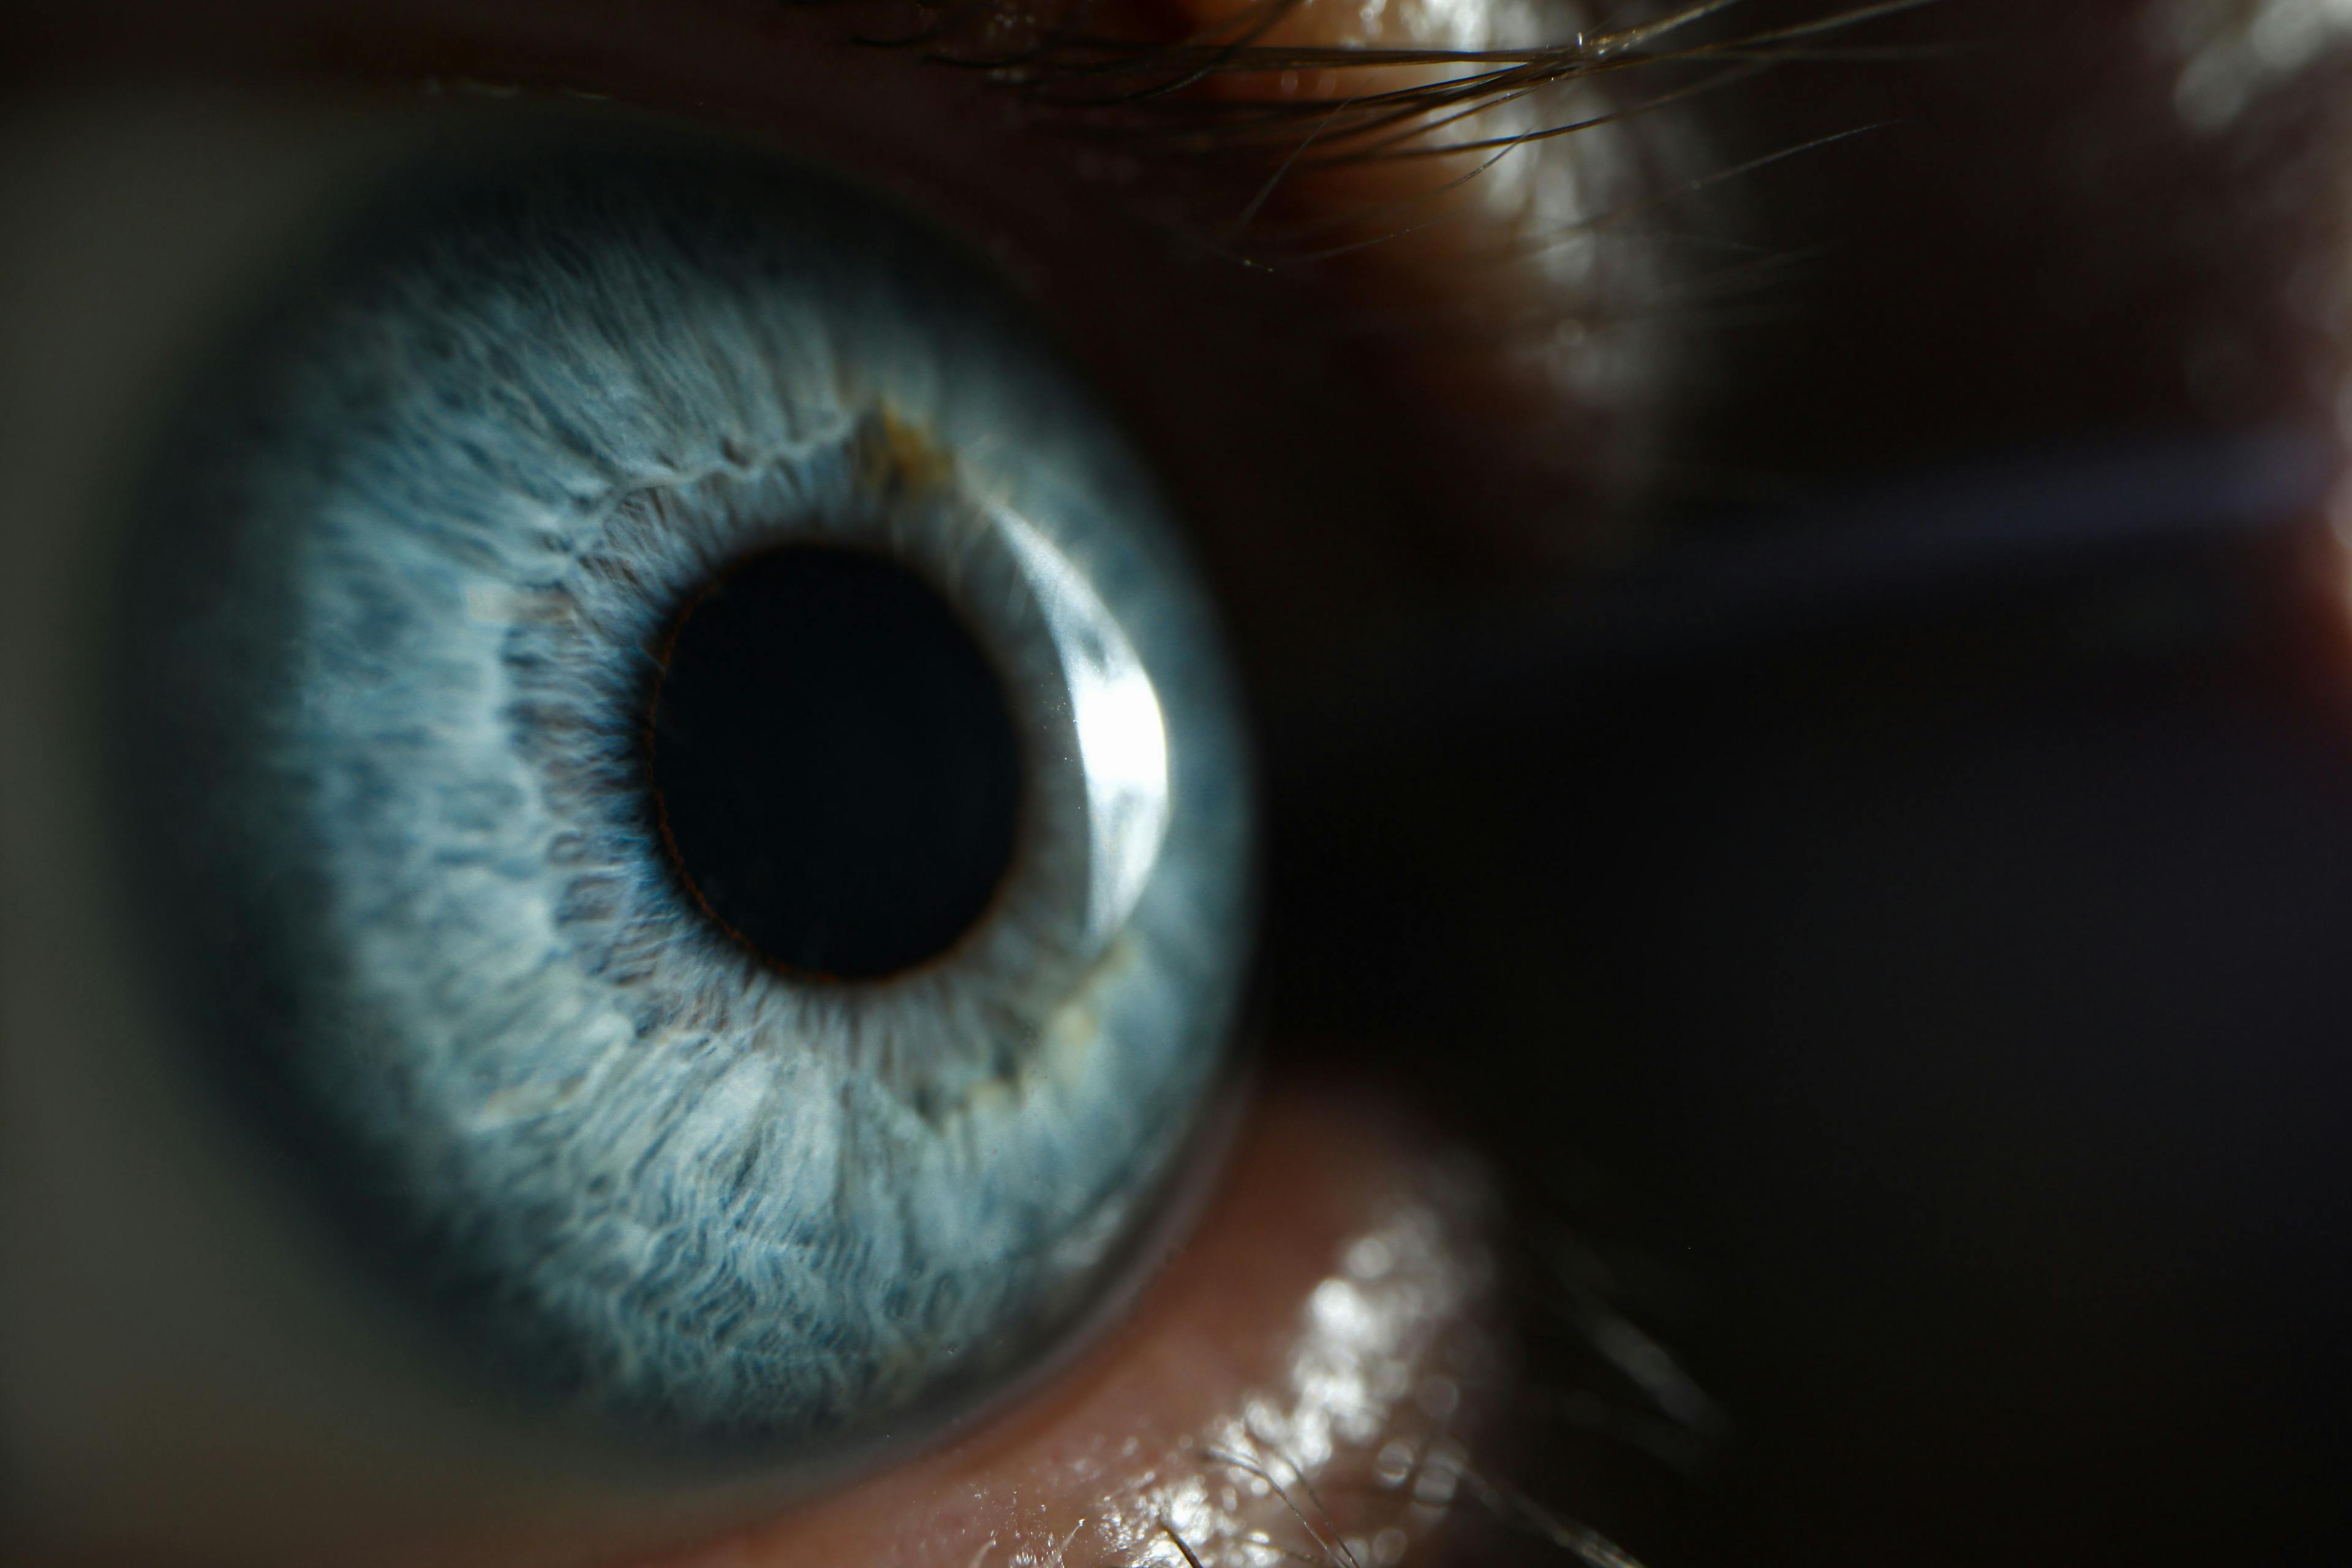 retina and glaucoma monitoring